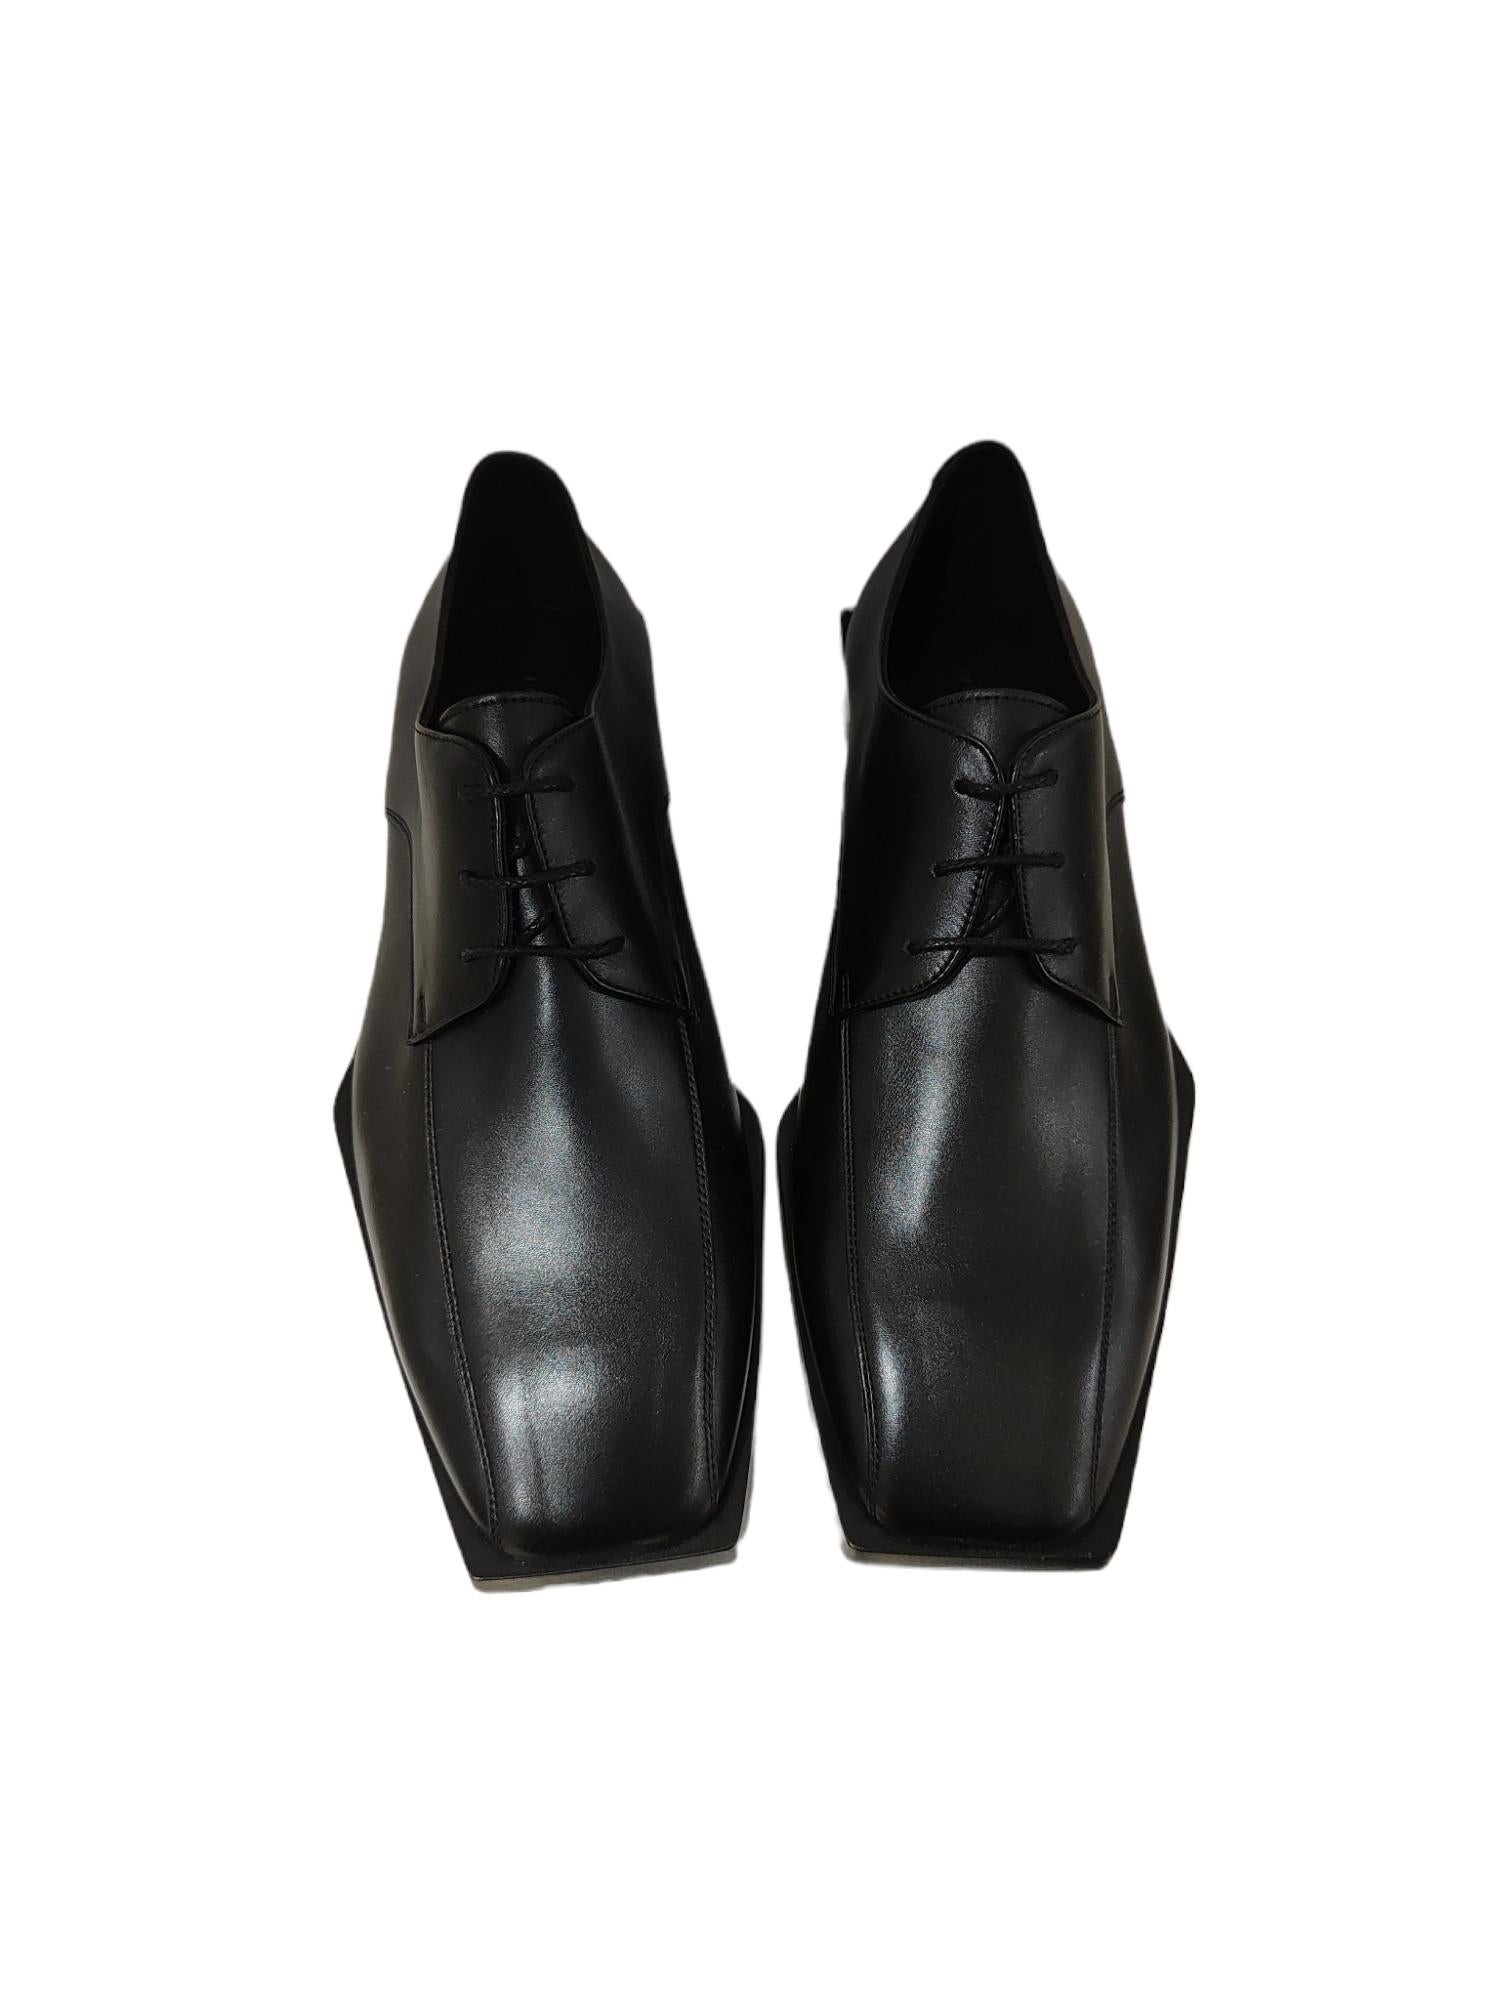 Women's or Men's Balenciaga black leather shoes 